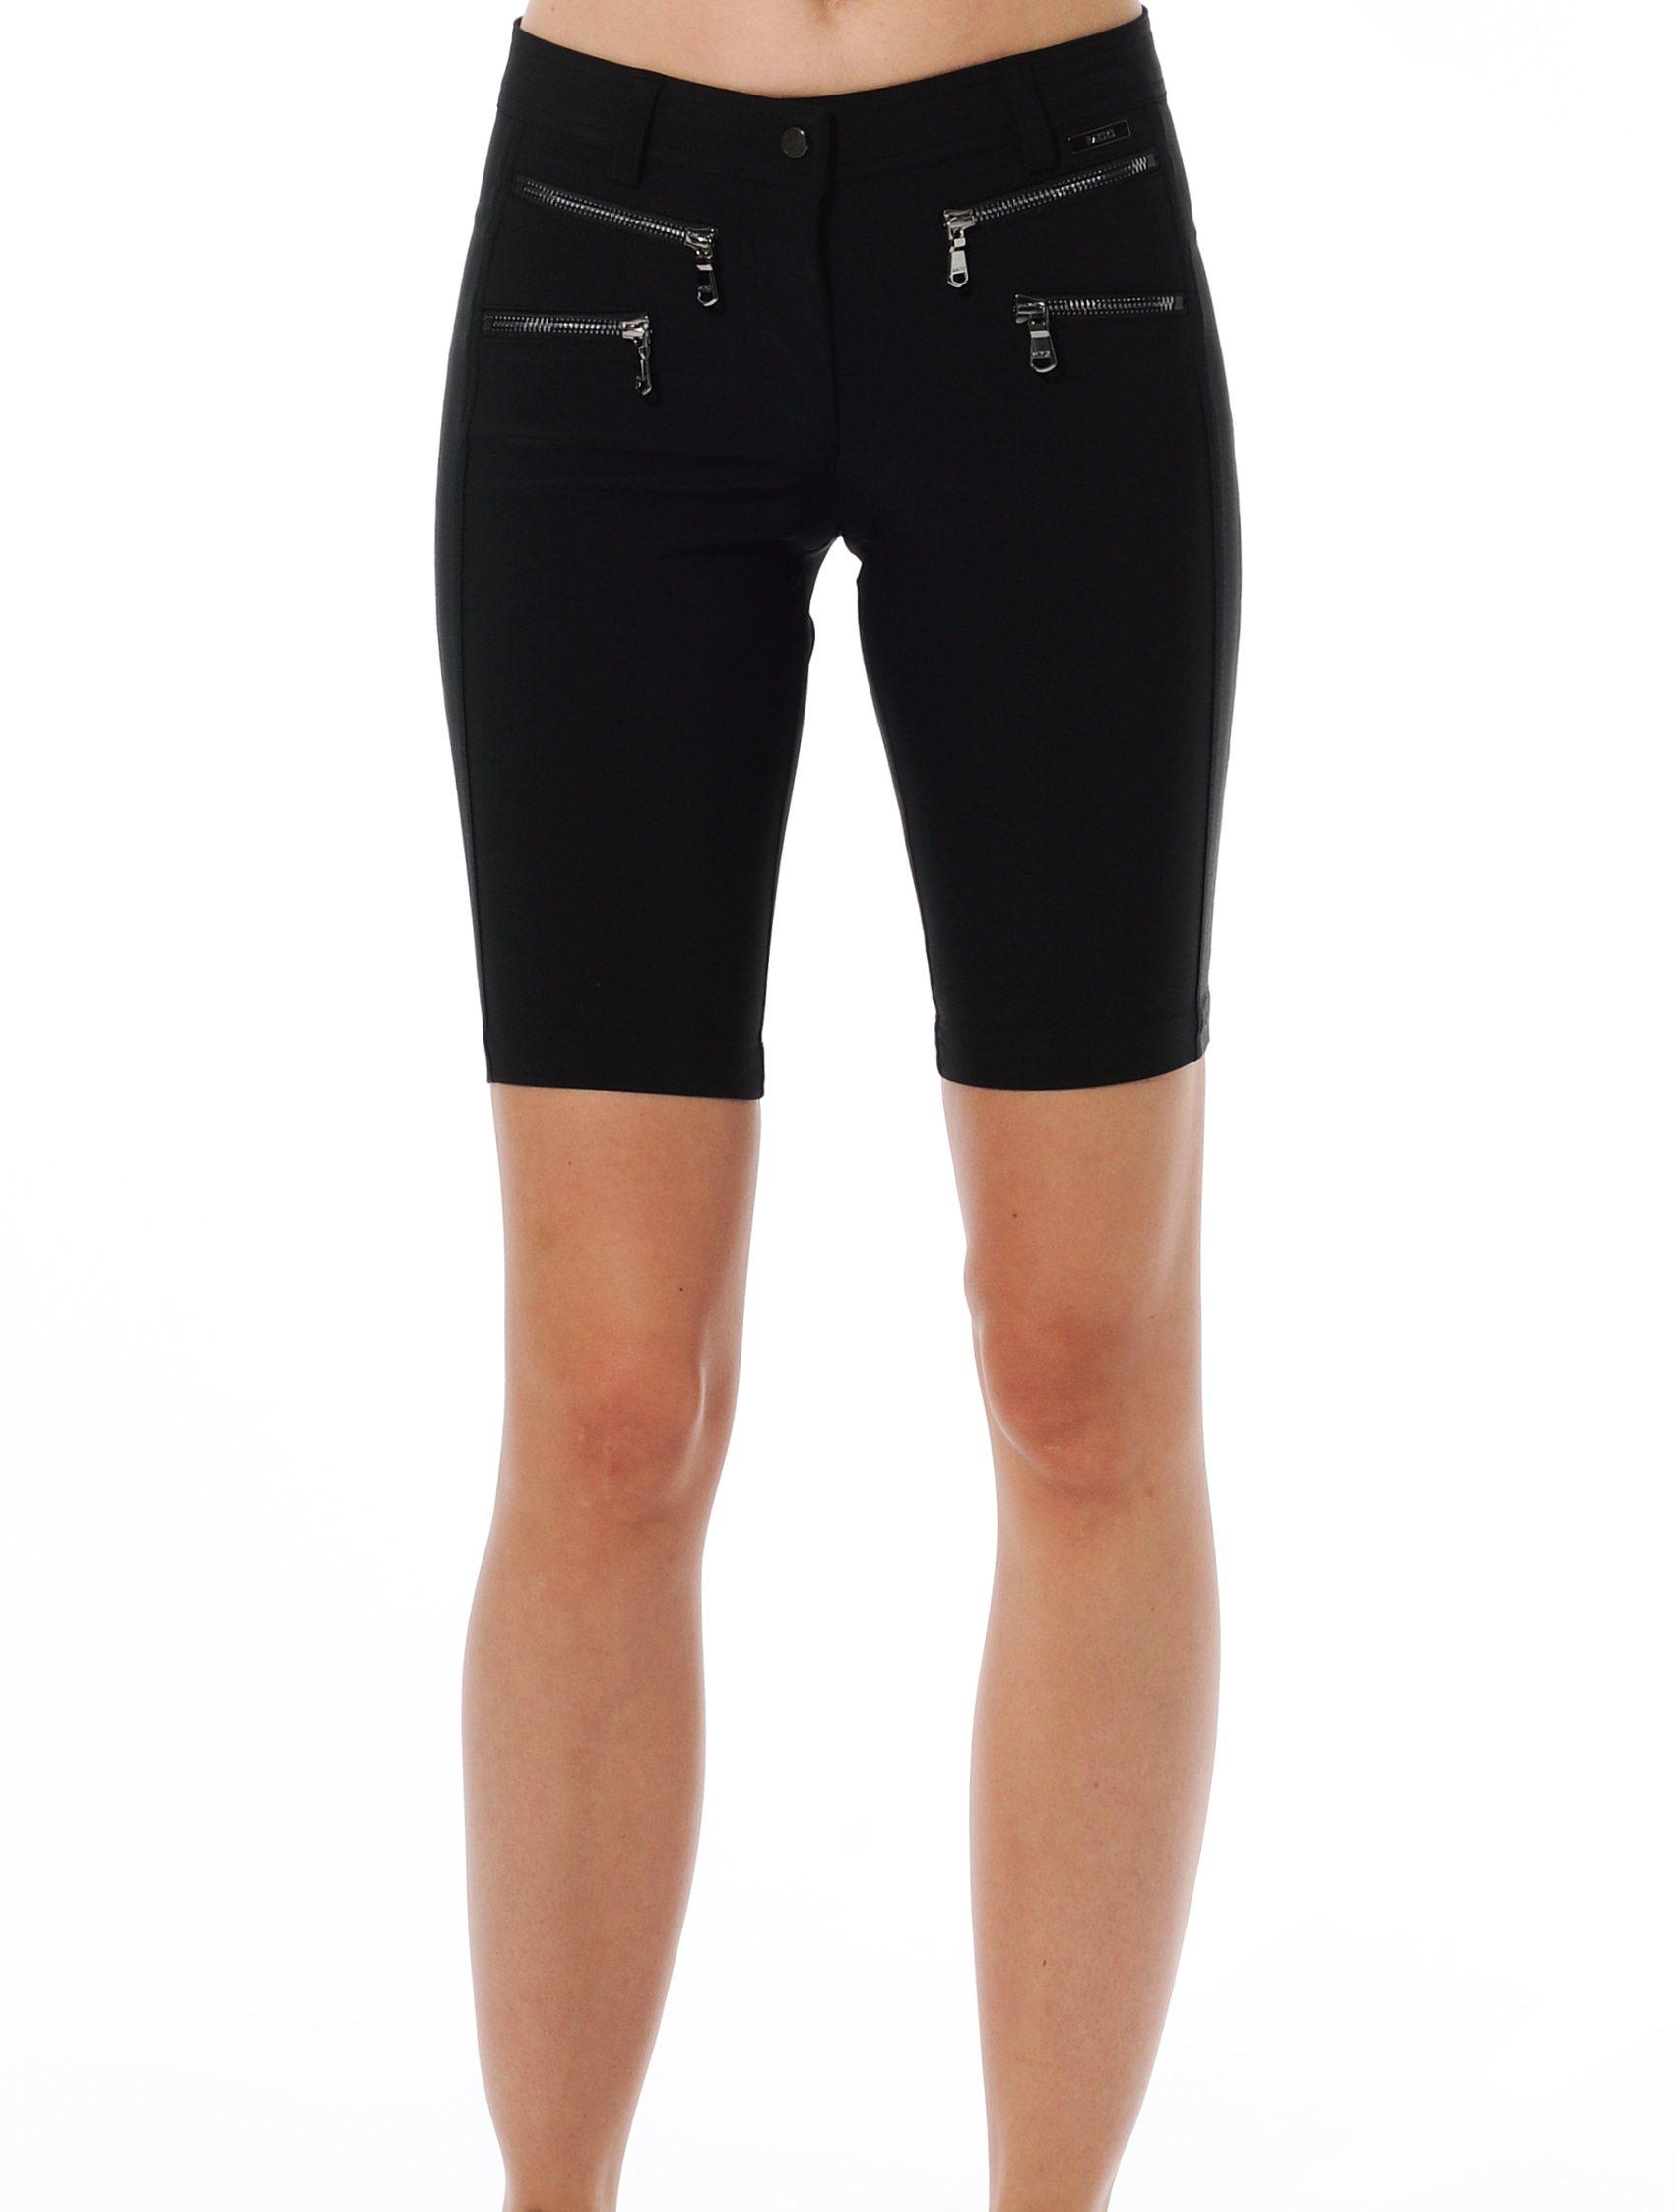 4way stretch double zip shorts black 